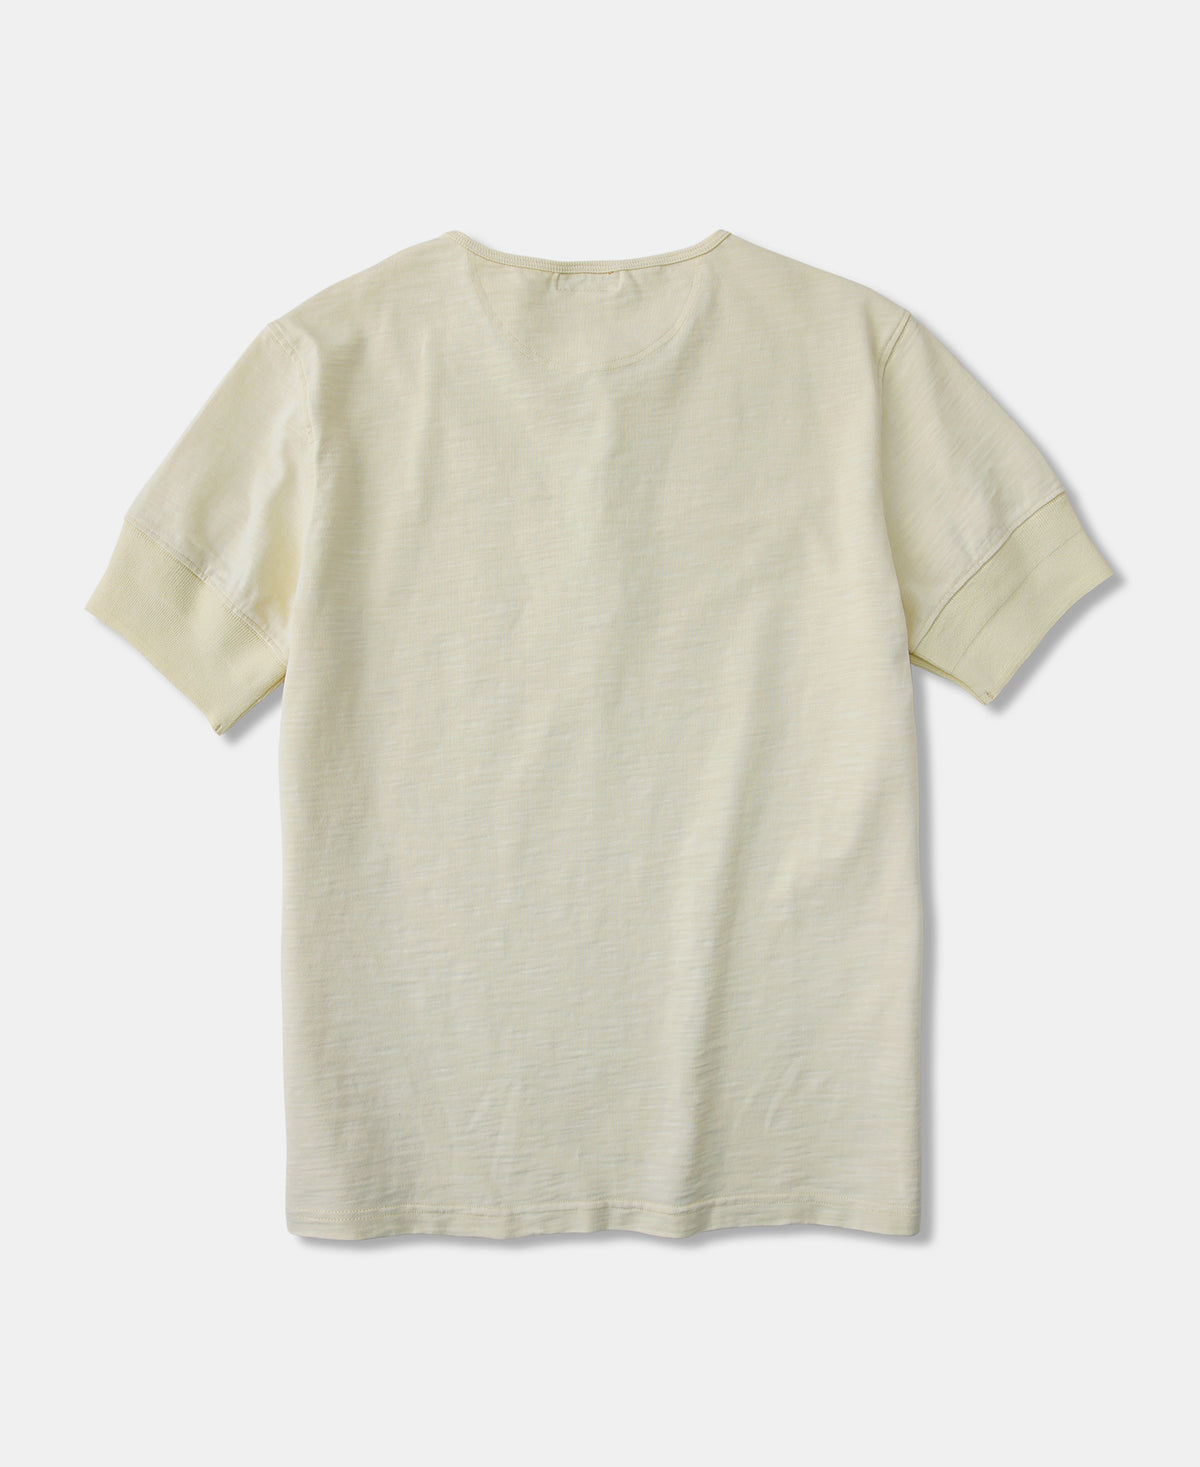 1900s 9.8 oz Slub Cotton Henley T-Shirt - Apricot